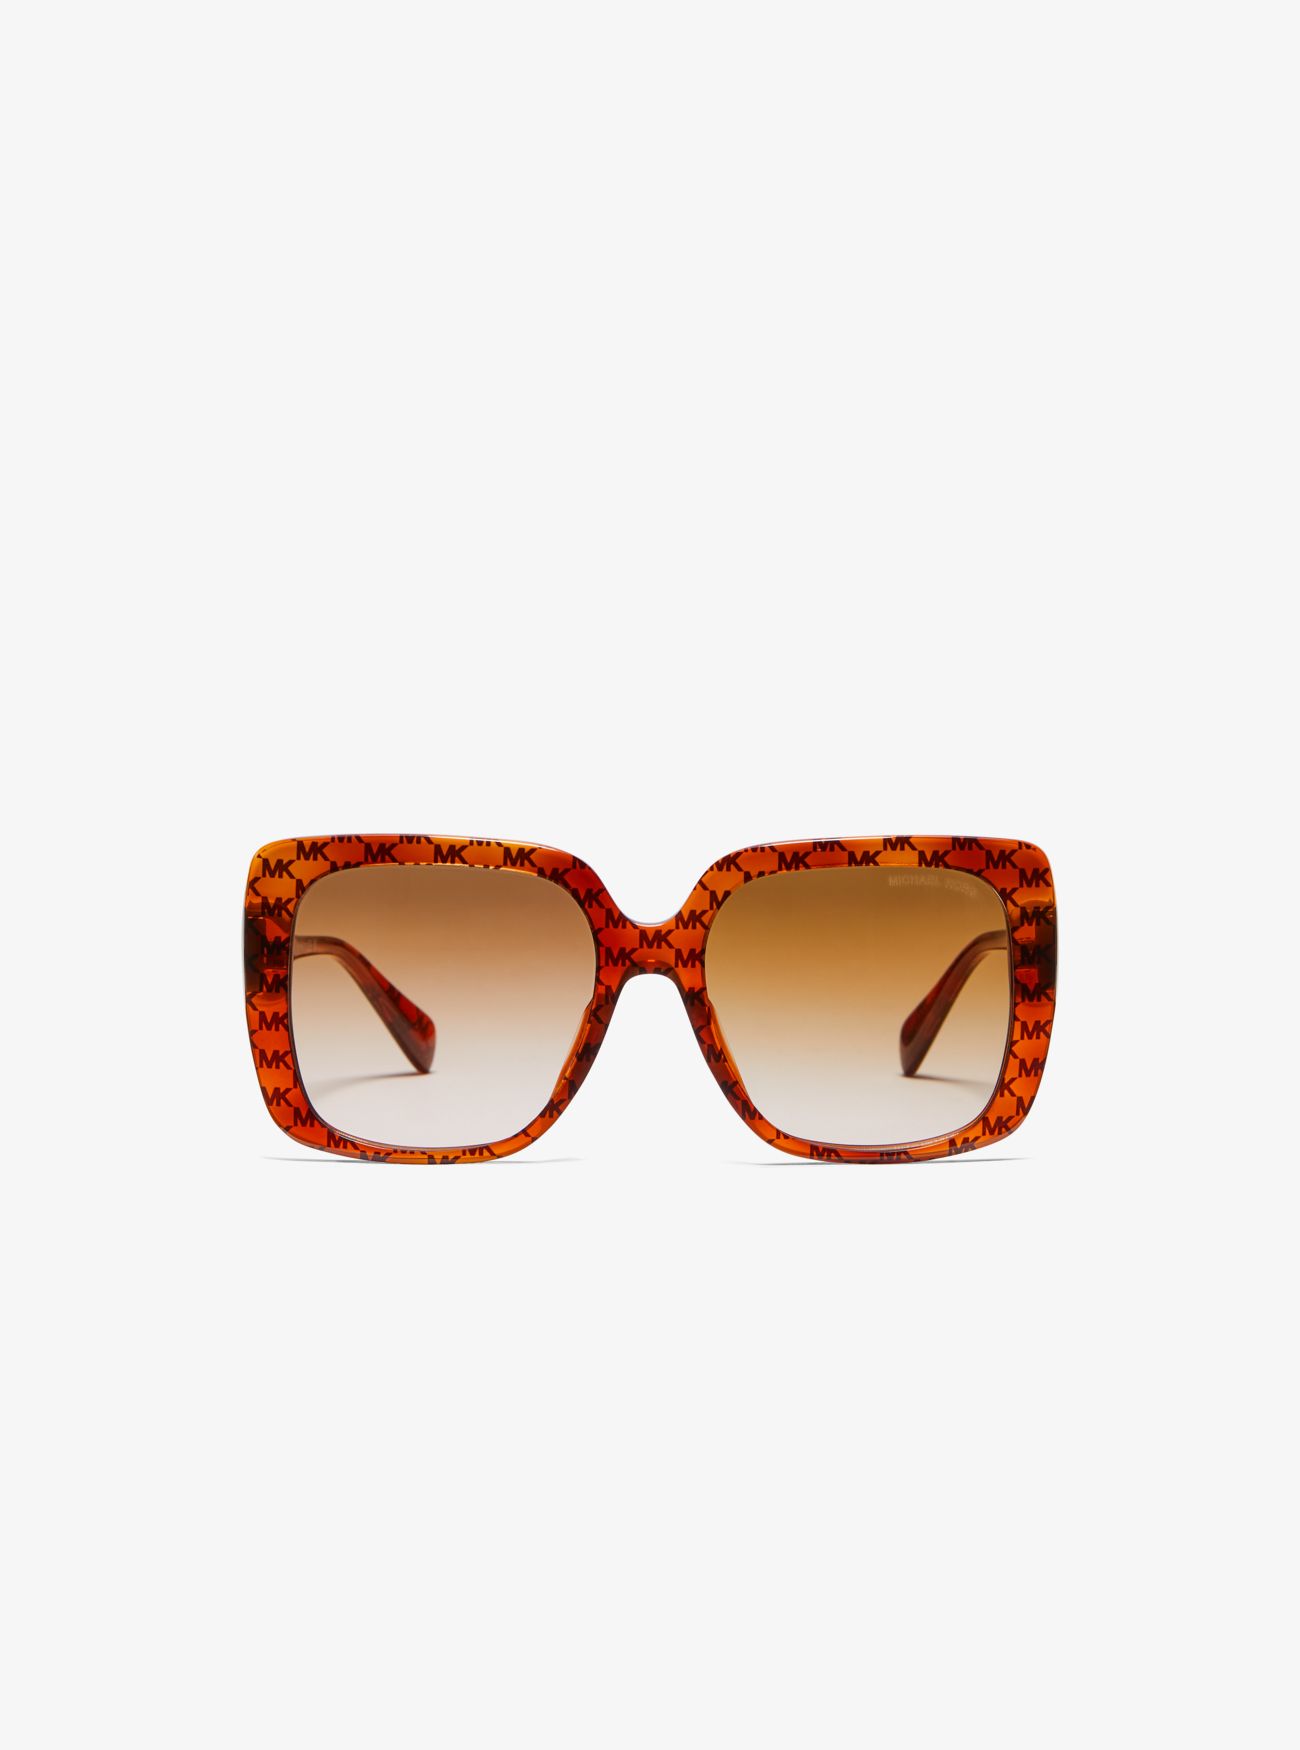 MK Mallorca Sunglasses - Amber - Michael Kors